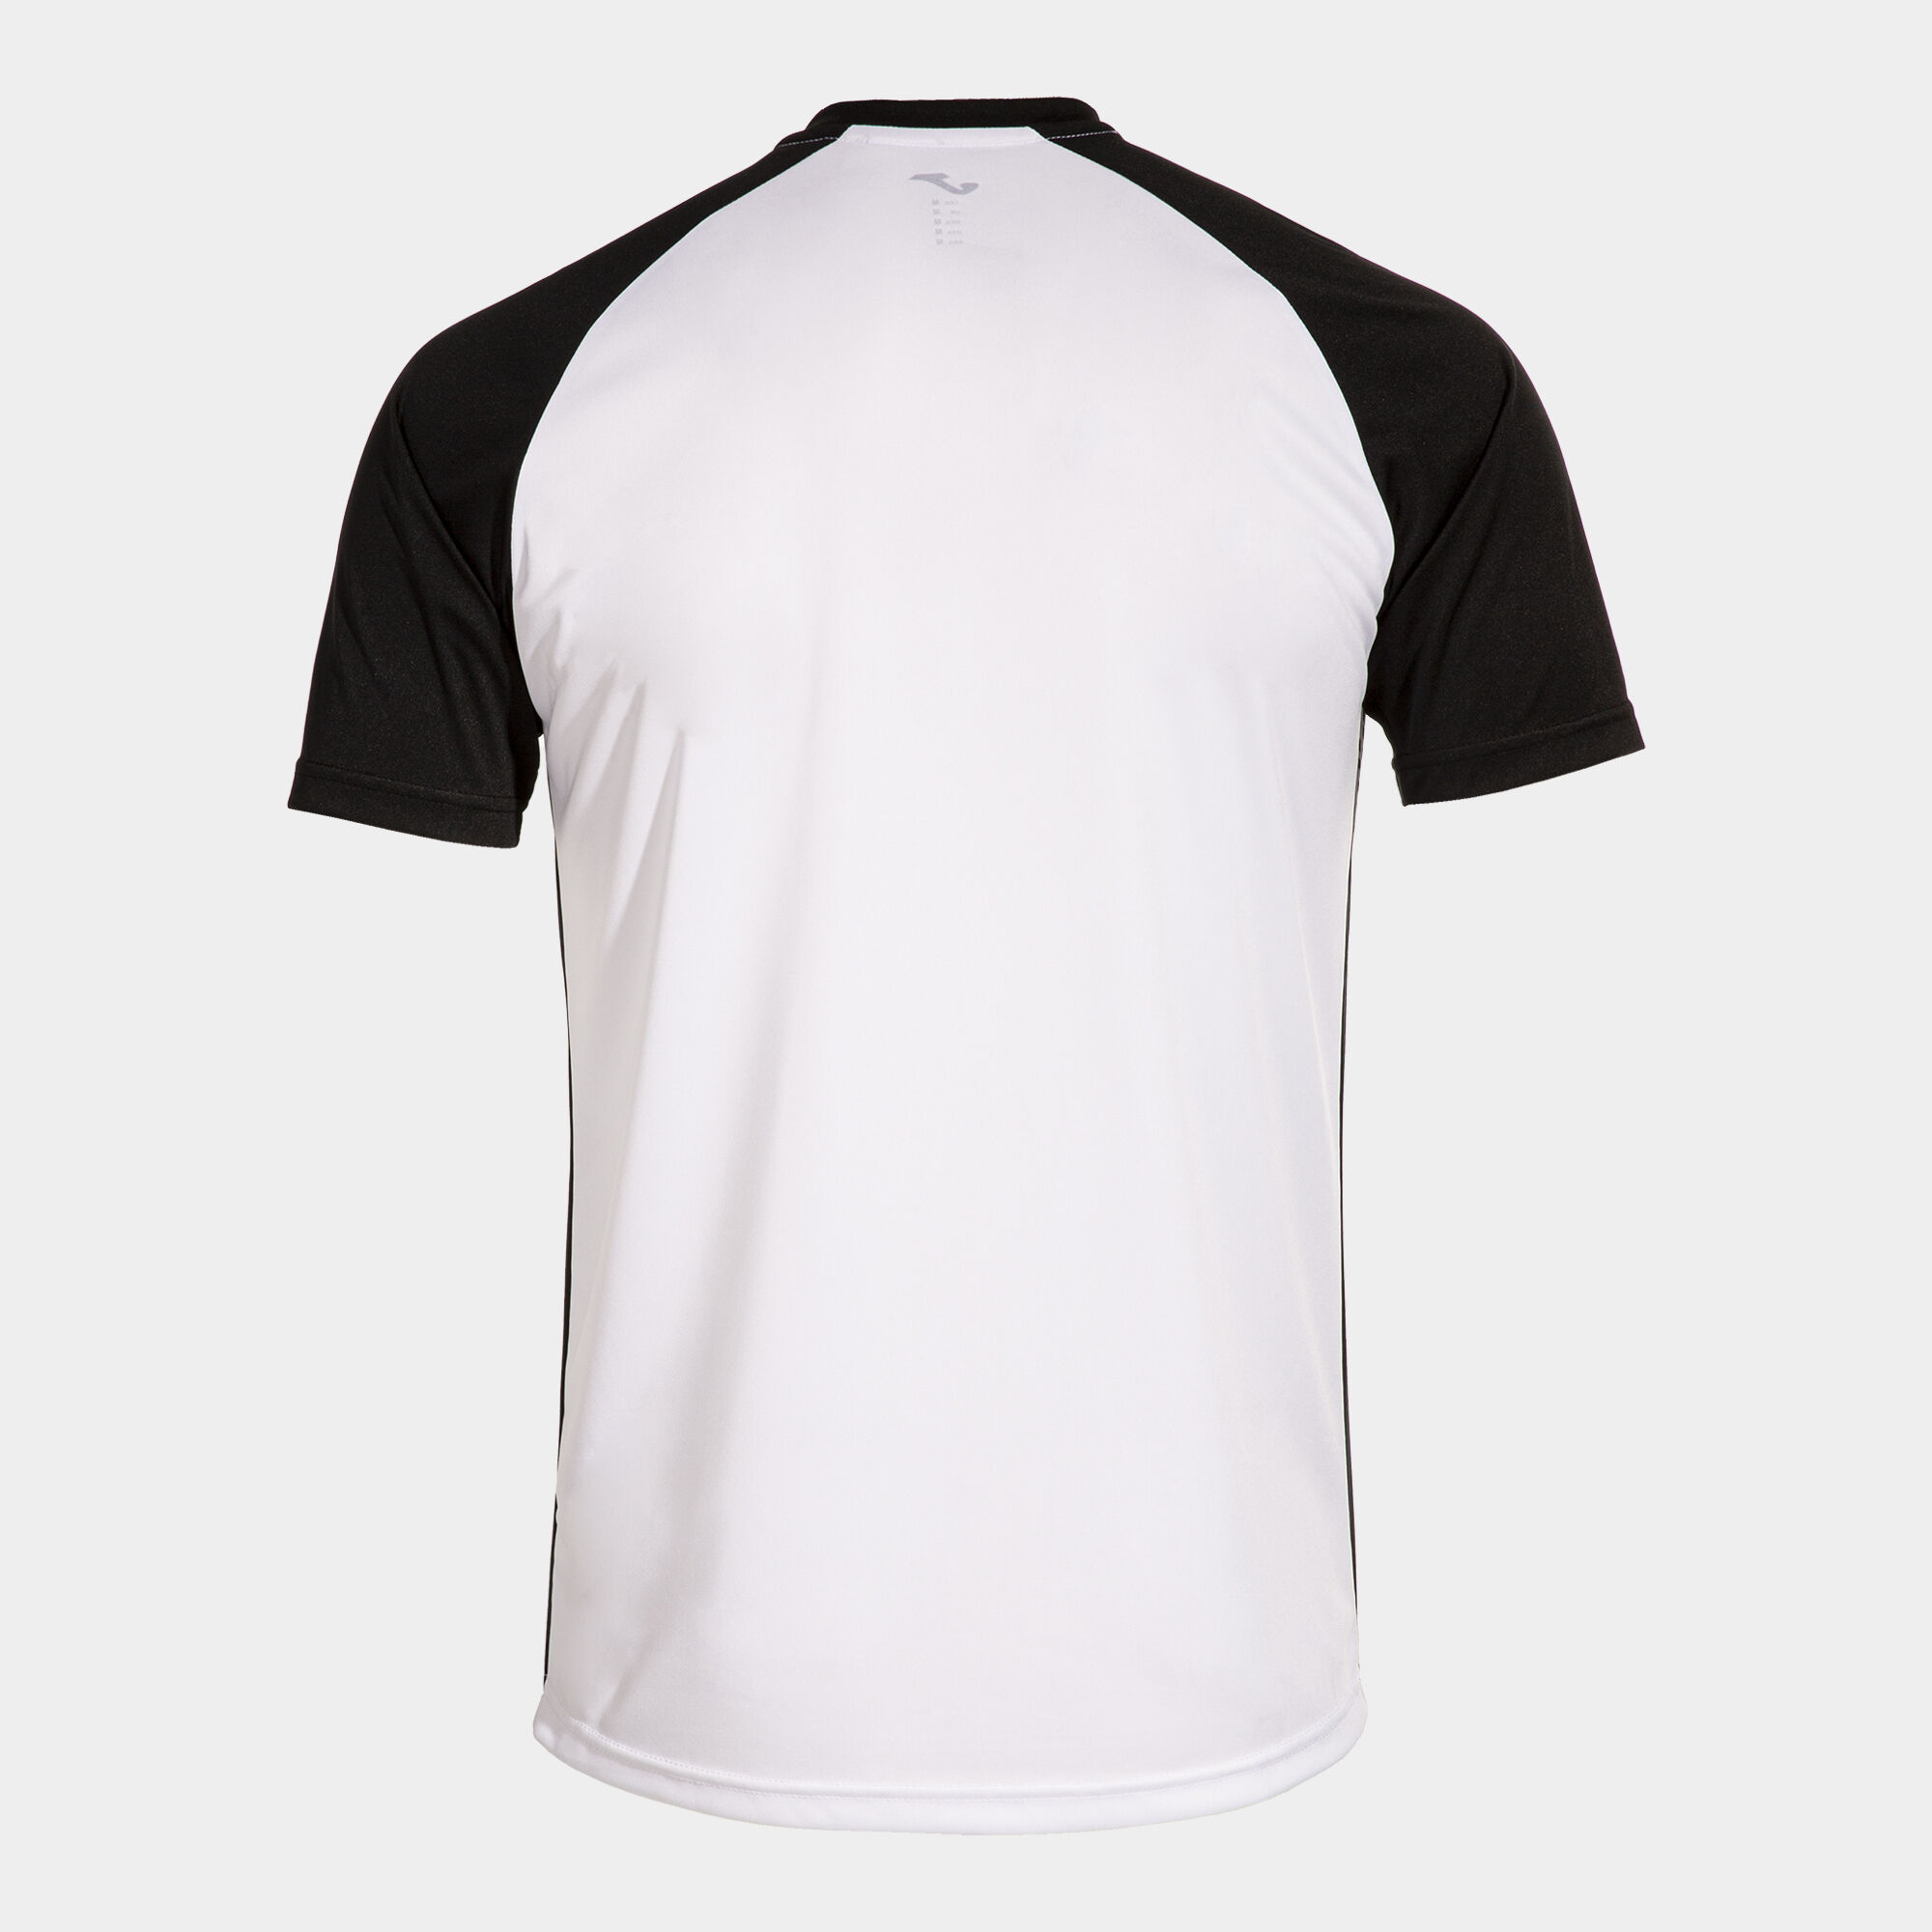 Shirt short sleeve man Tiger VI white black